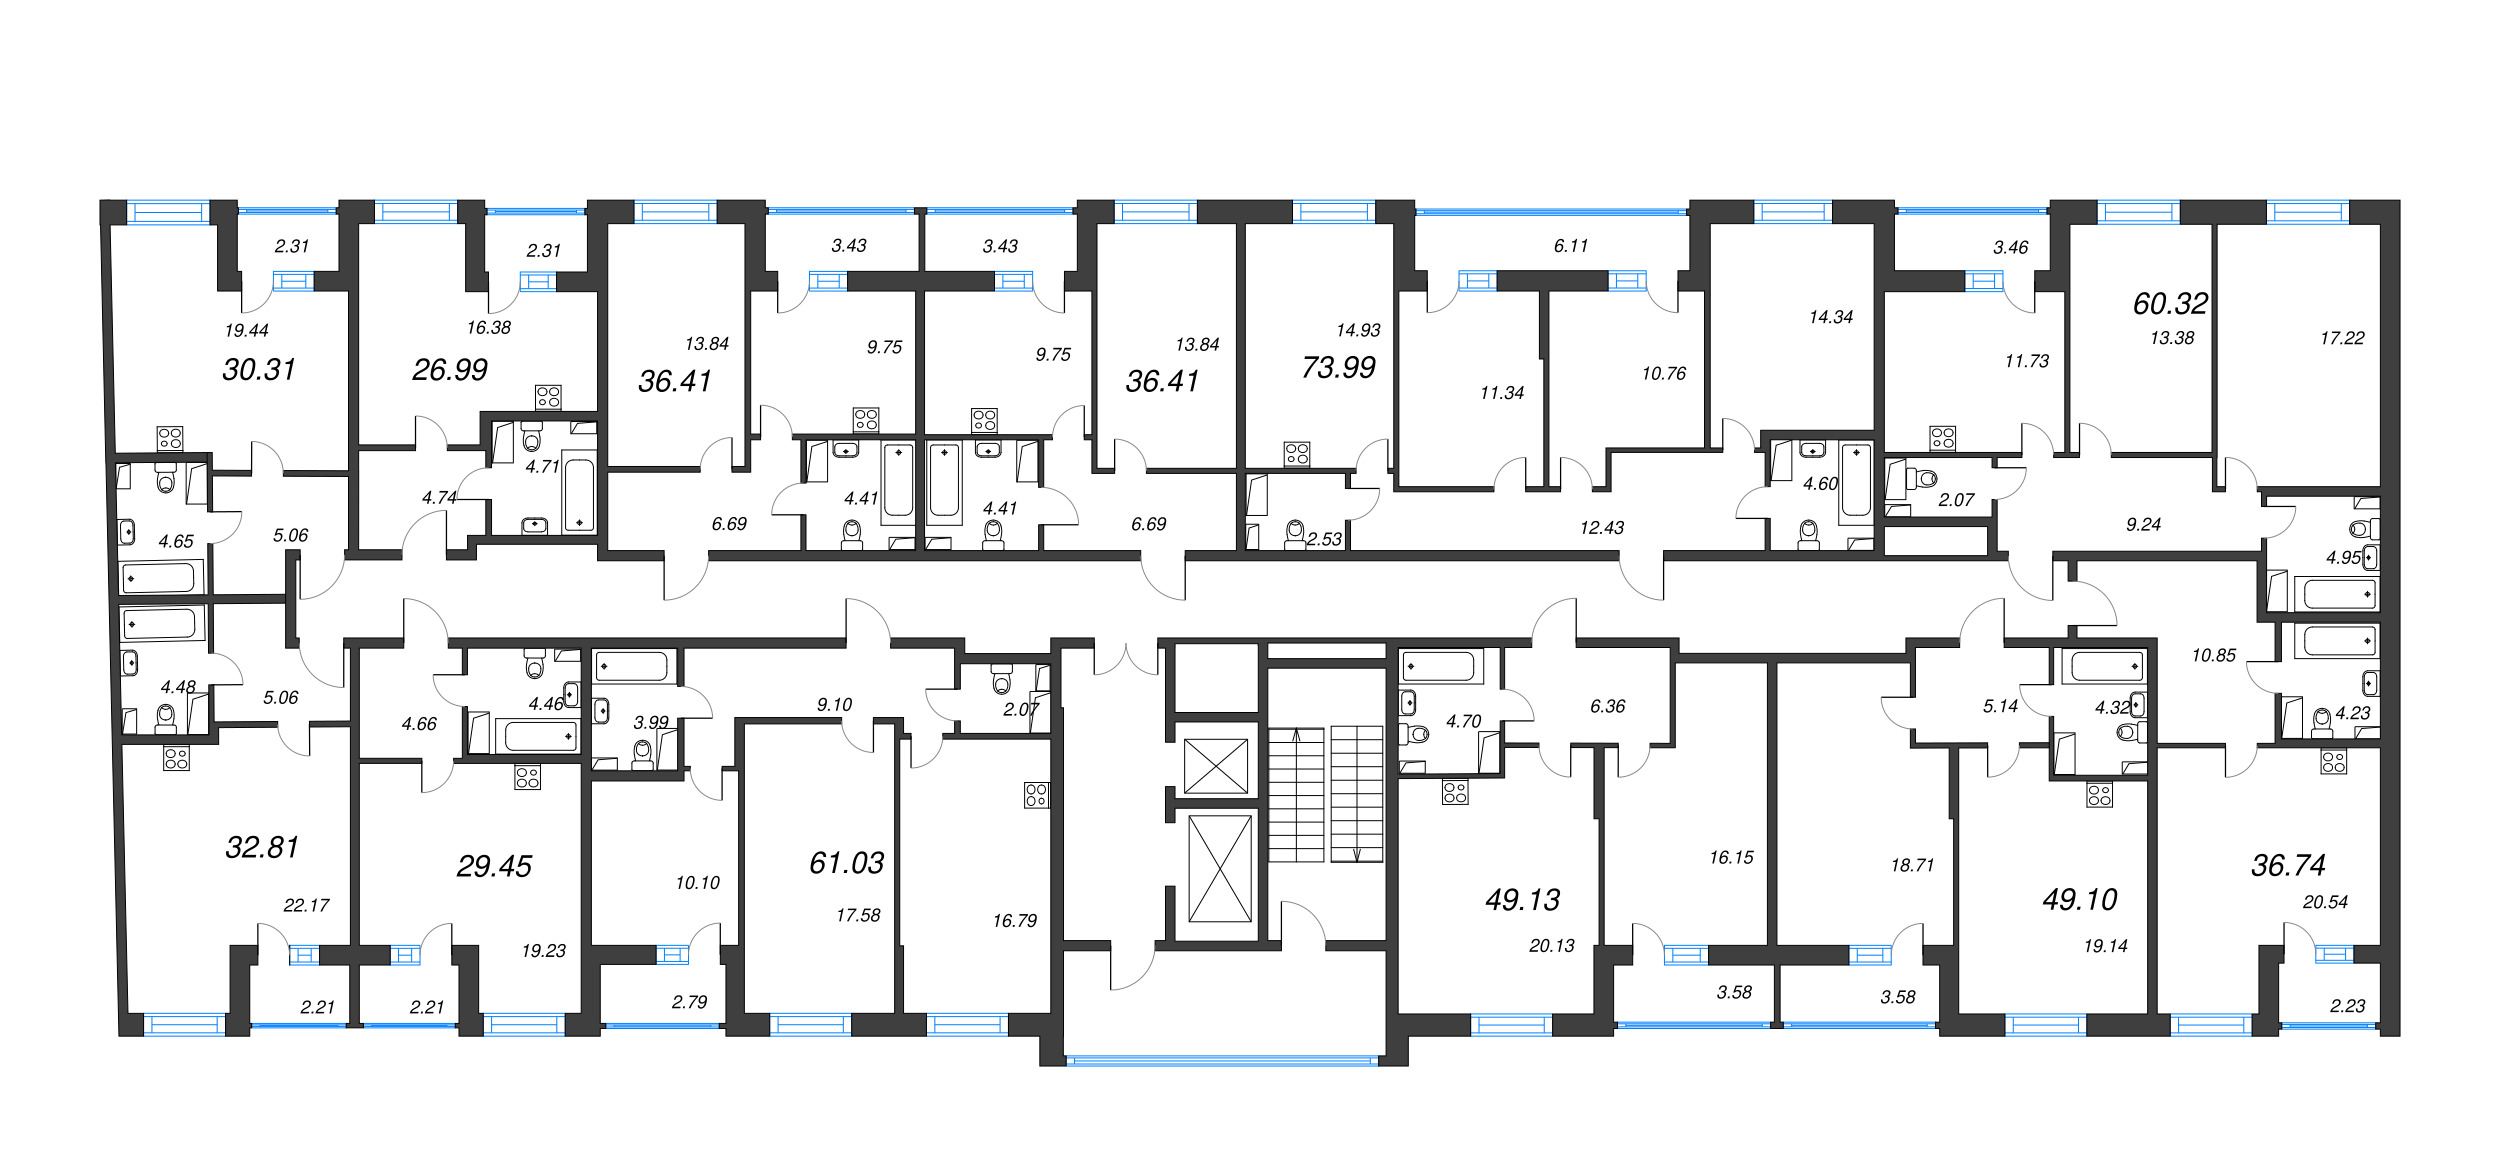 2-комнатная (Евро) квартира, 49.1 м² - планировка этажа